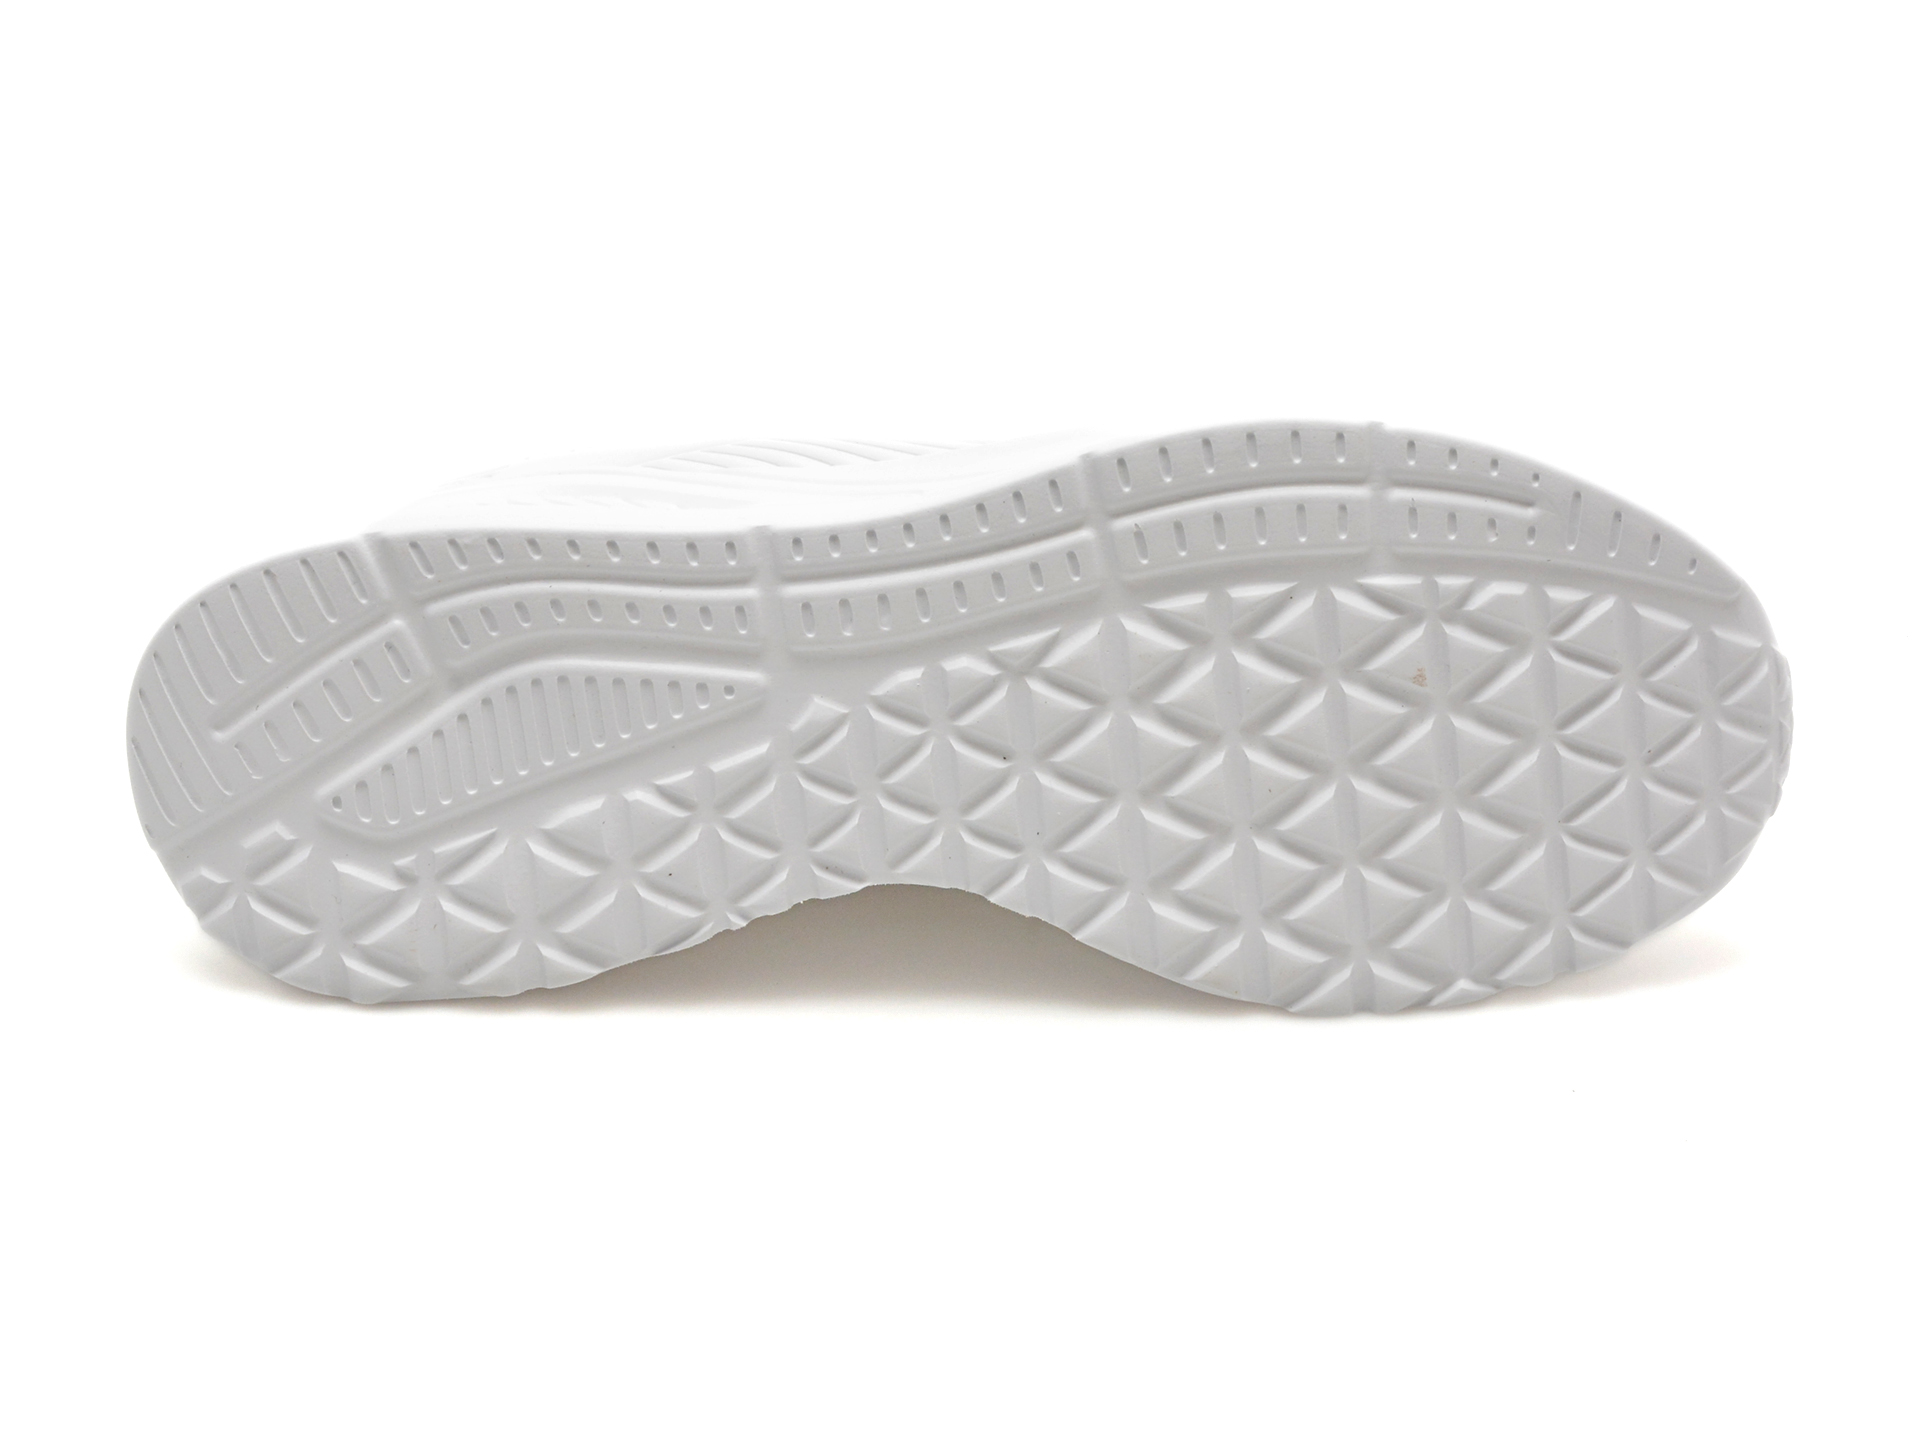 Pantofi sport SKECHERS albi, BOBS BUNO, din piele ecologica